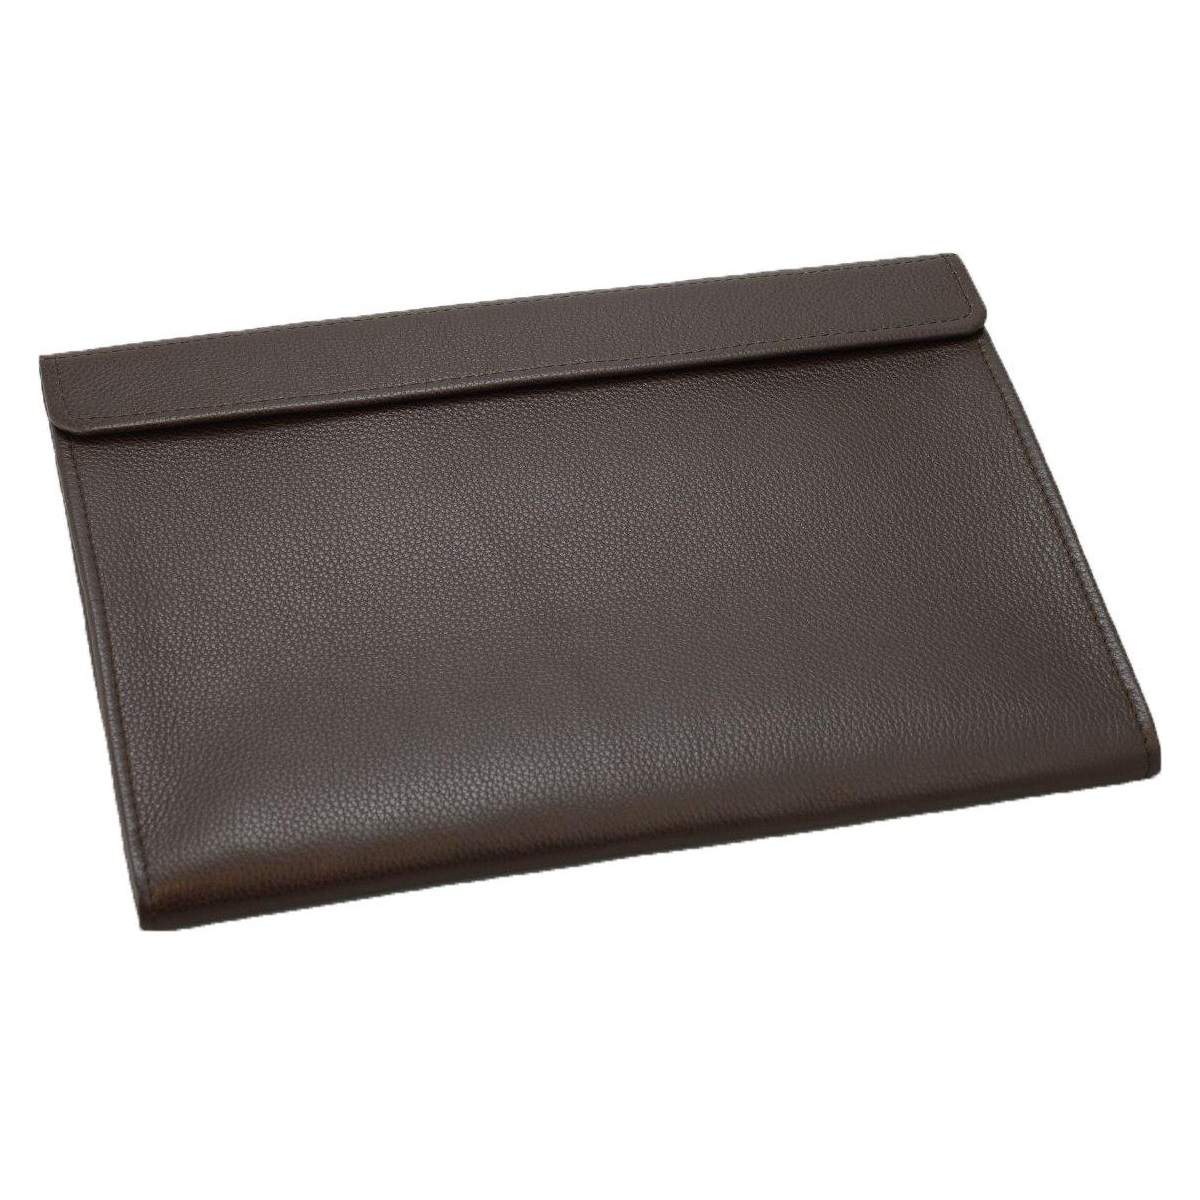 Кожаный чехол-конверт Alexander Dark Brown для Macbook Air 13/Macbook Pro 13